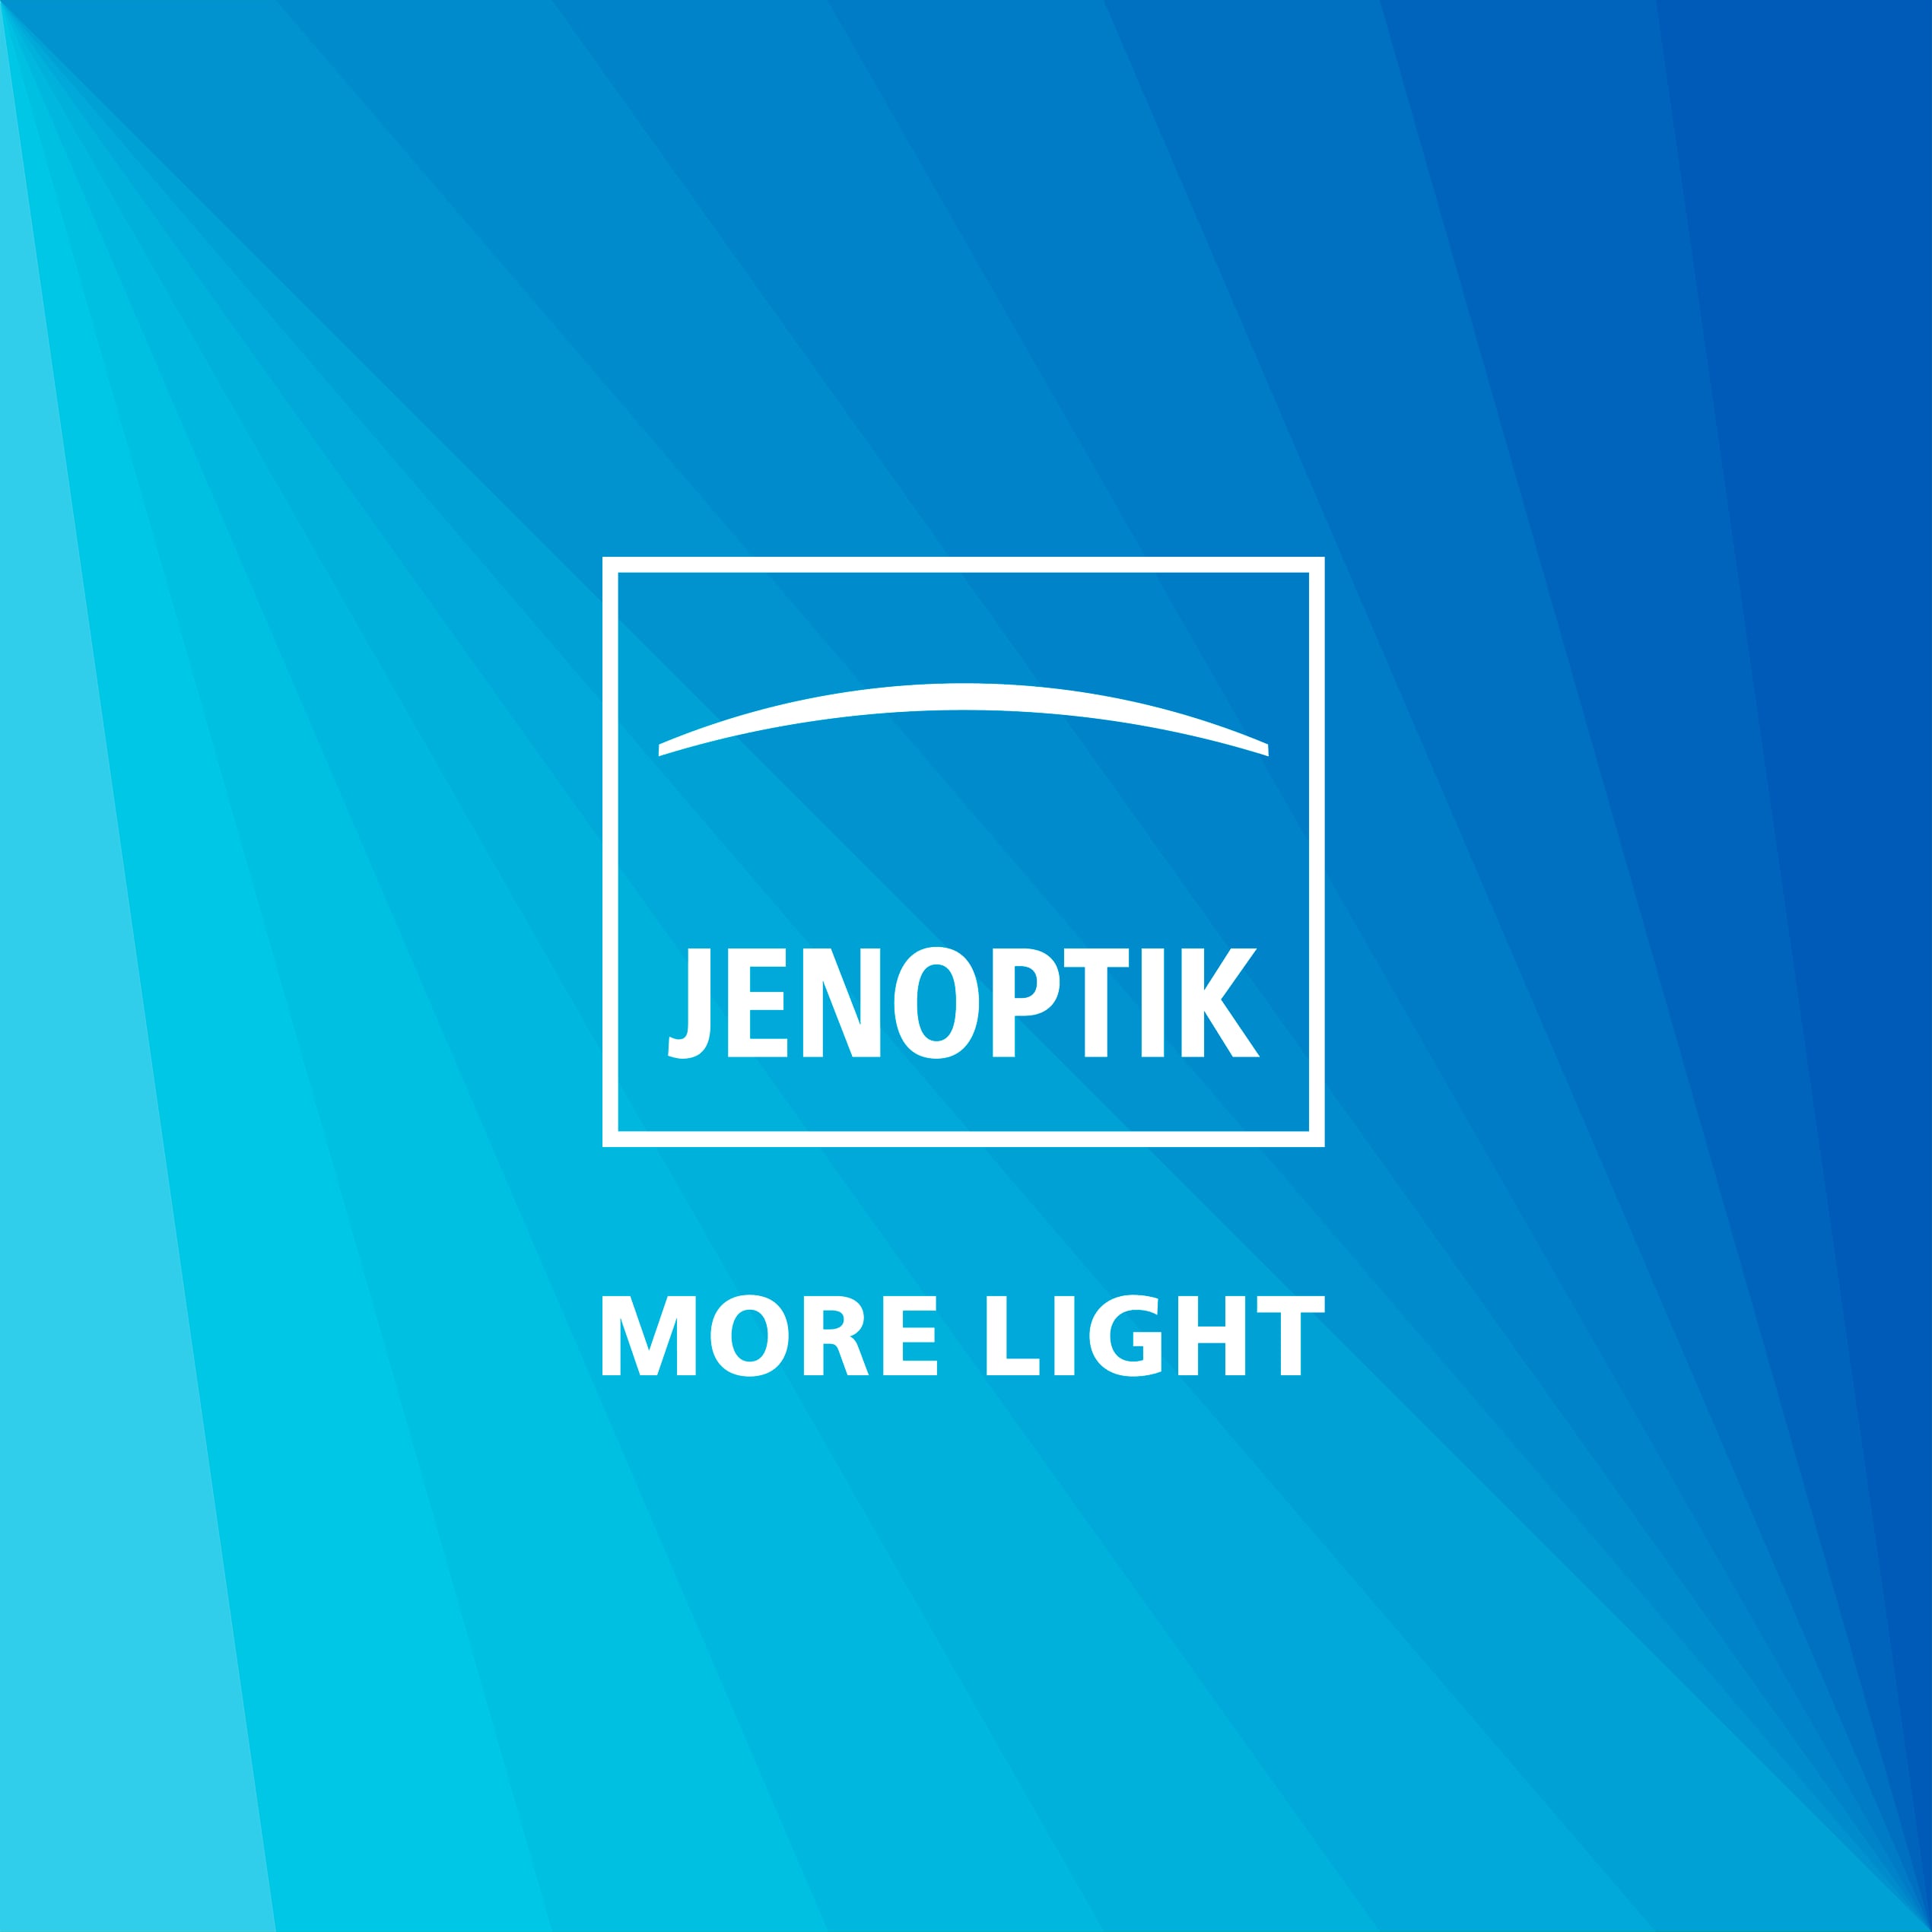 Customer-specific optoelectronic systems | Jenoptik